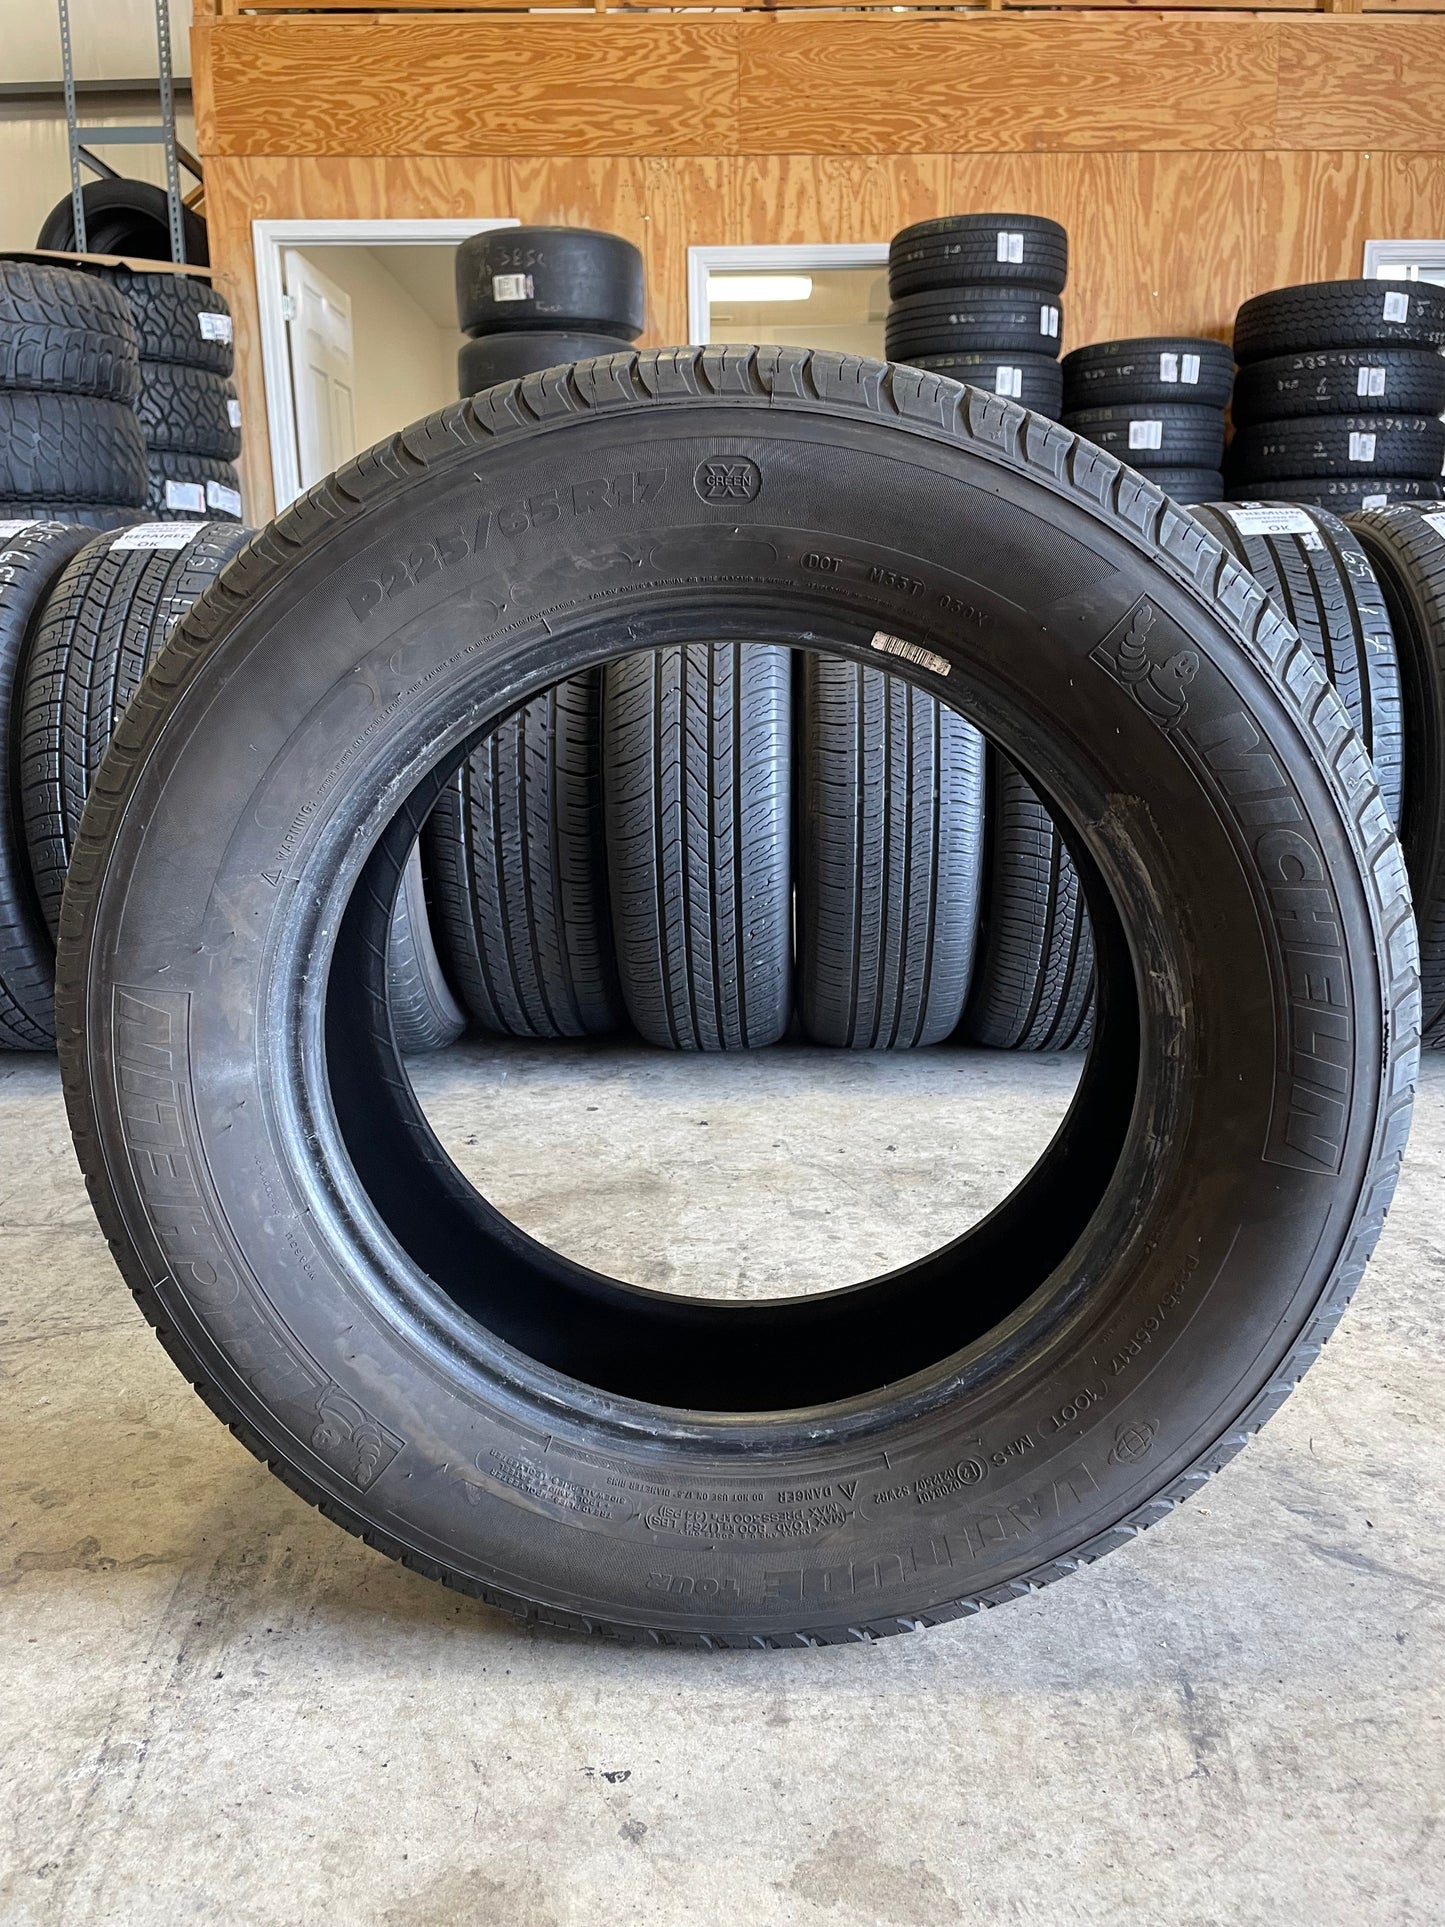 SINGLE 225/65R17 Michelin Latitude Tour 100 T SL - Used Tires